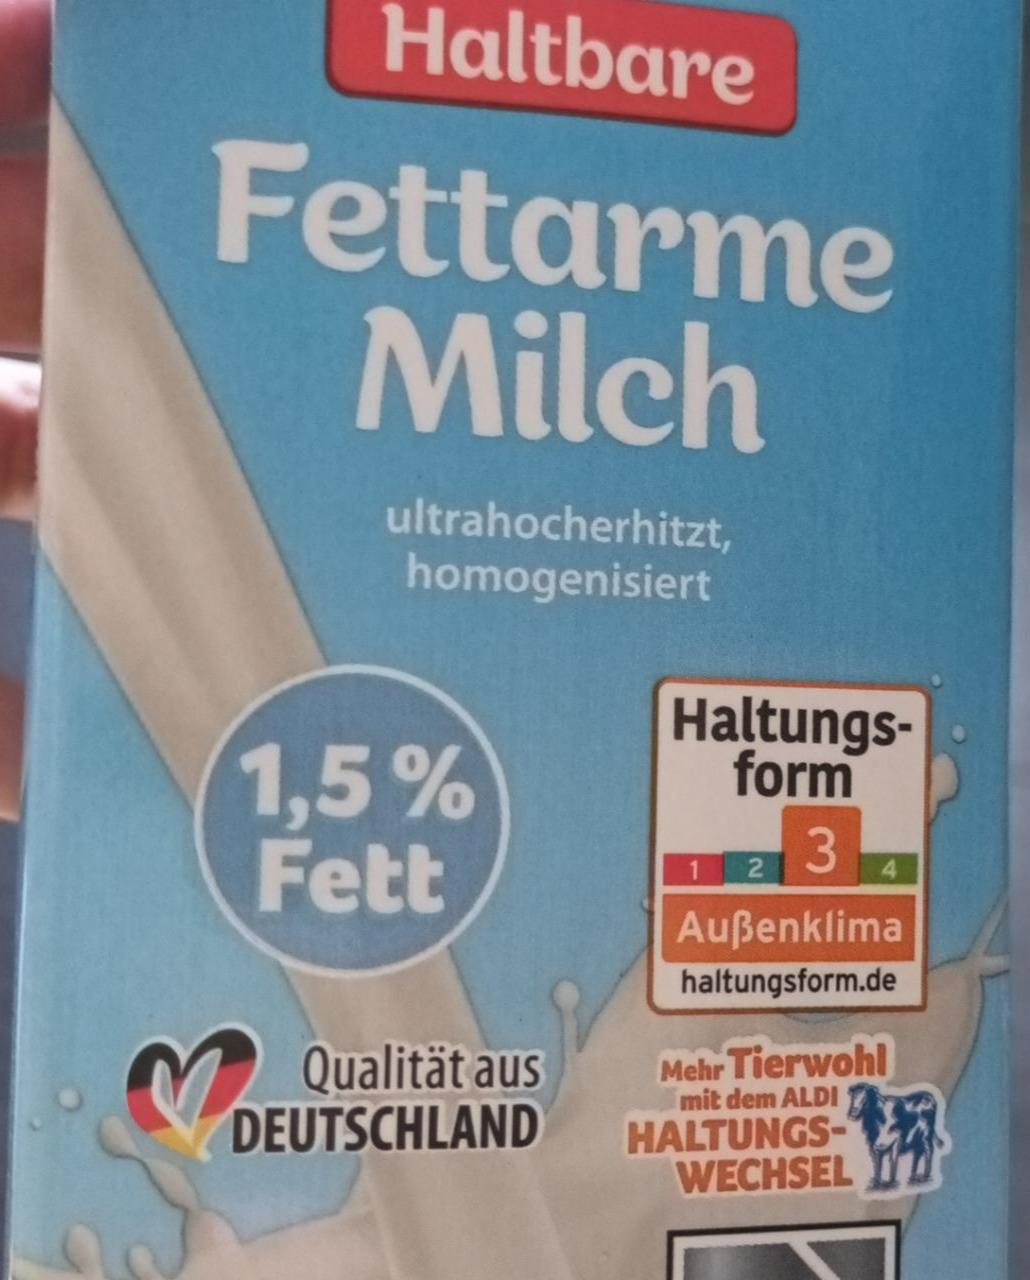 Fotografie - Haltbare Fettarme Milch 1,5% Fett Milsani